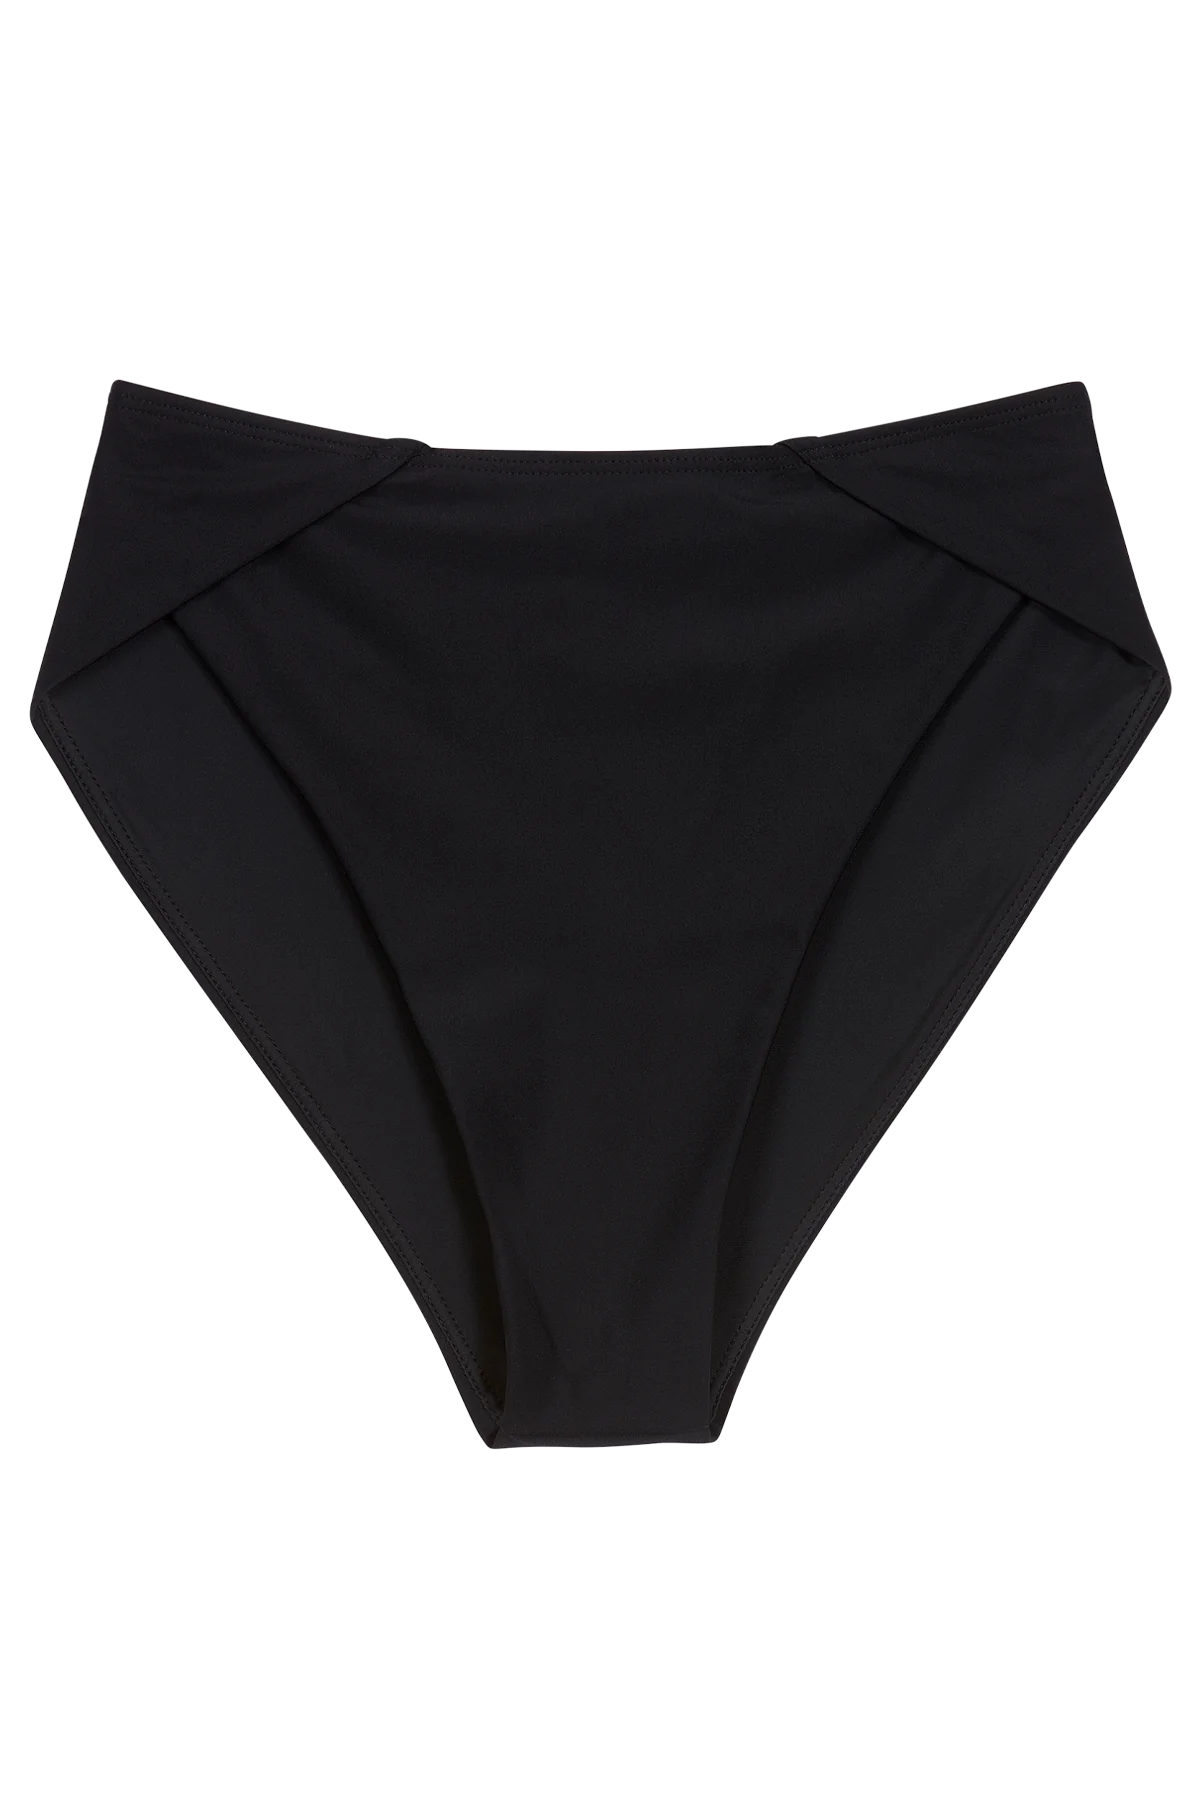 Zonarch Swim- Laetitia Bottom in Black